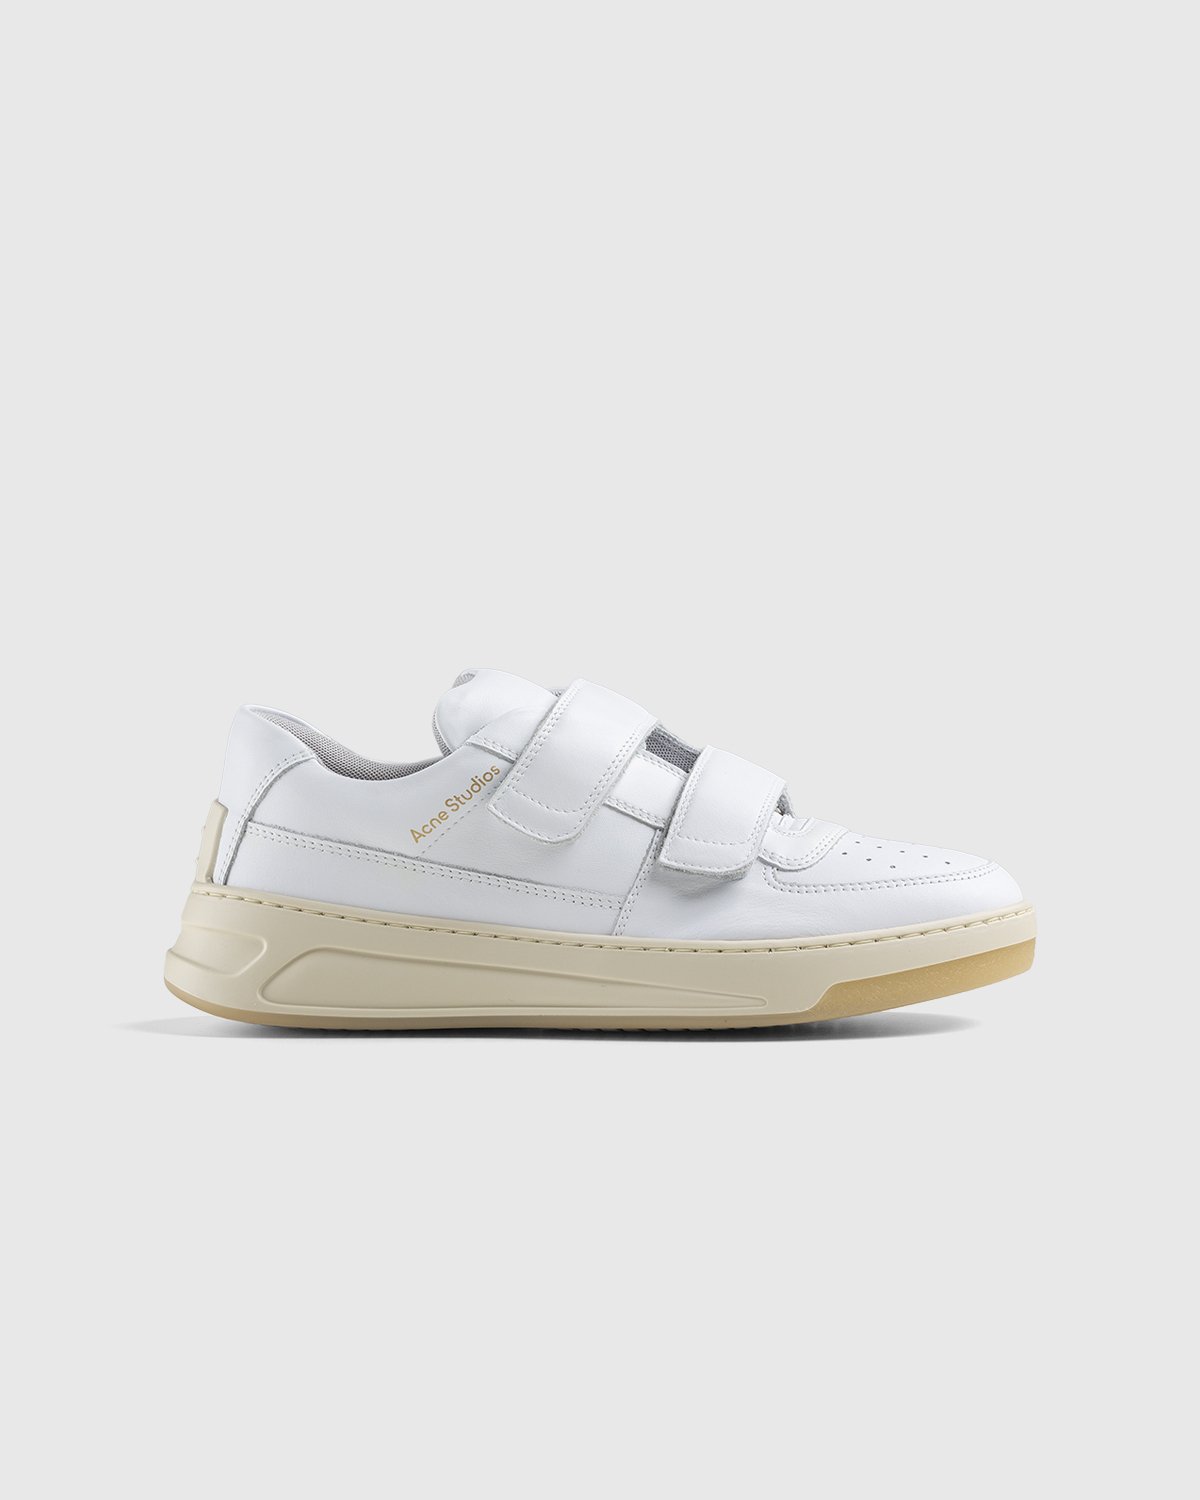 Acne Studios - Perey Velcro Strap Sneakers White - Footwear - White - Image 1